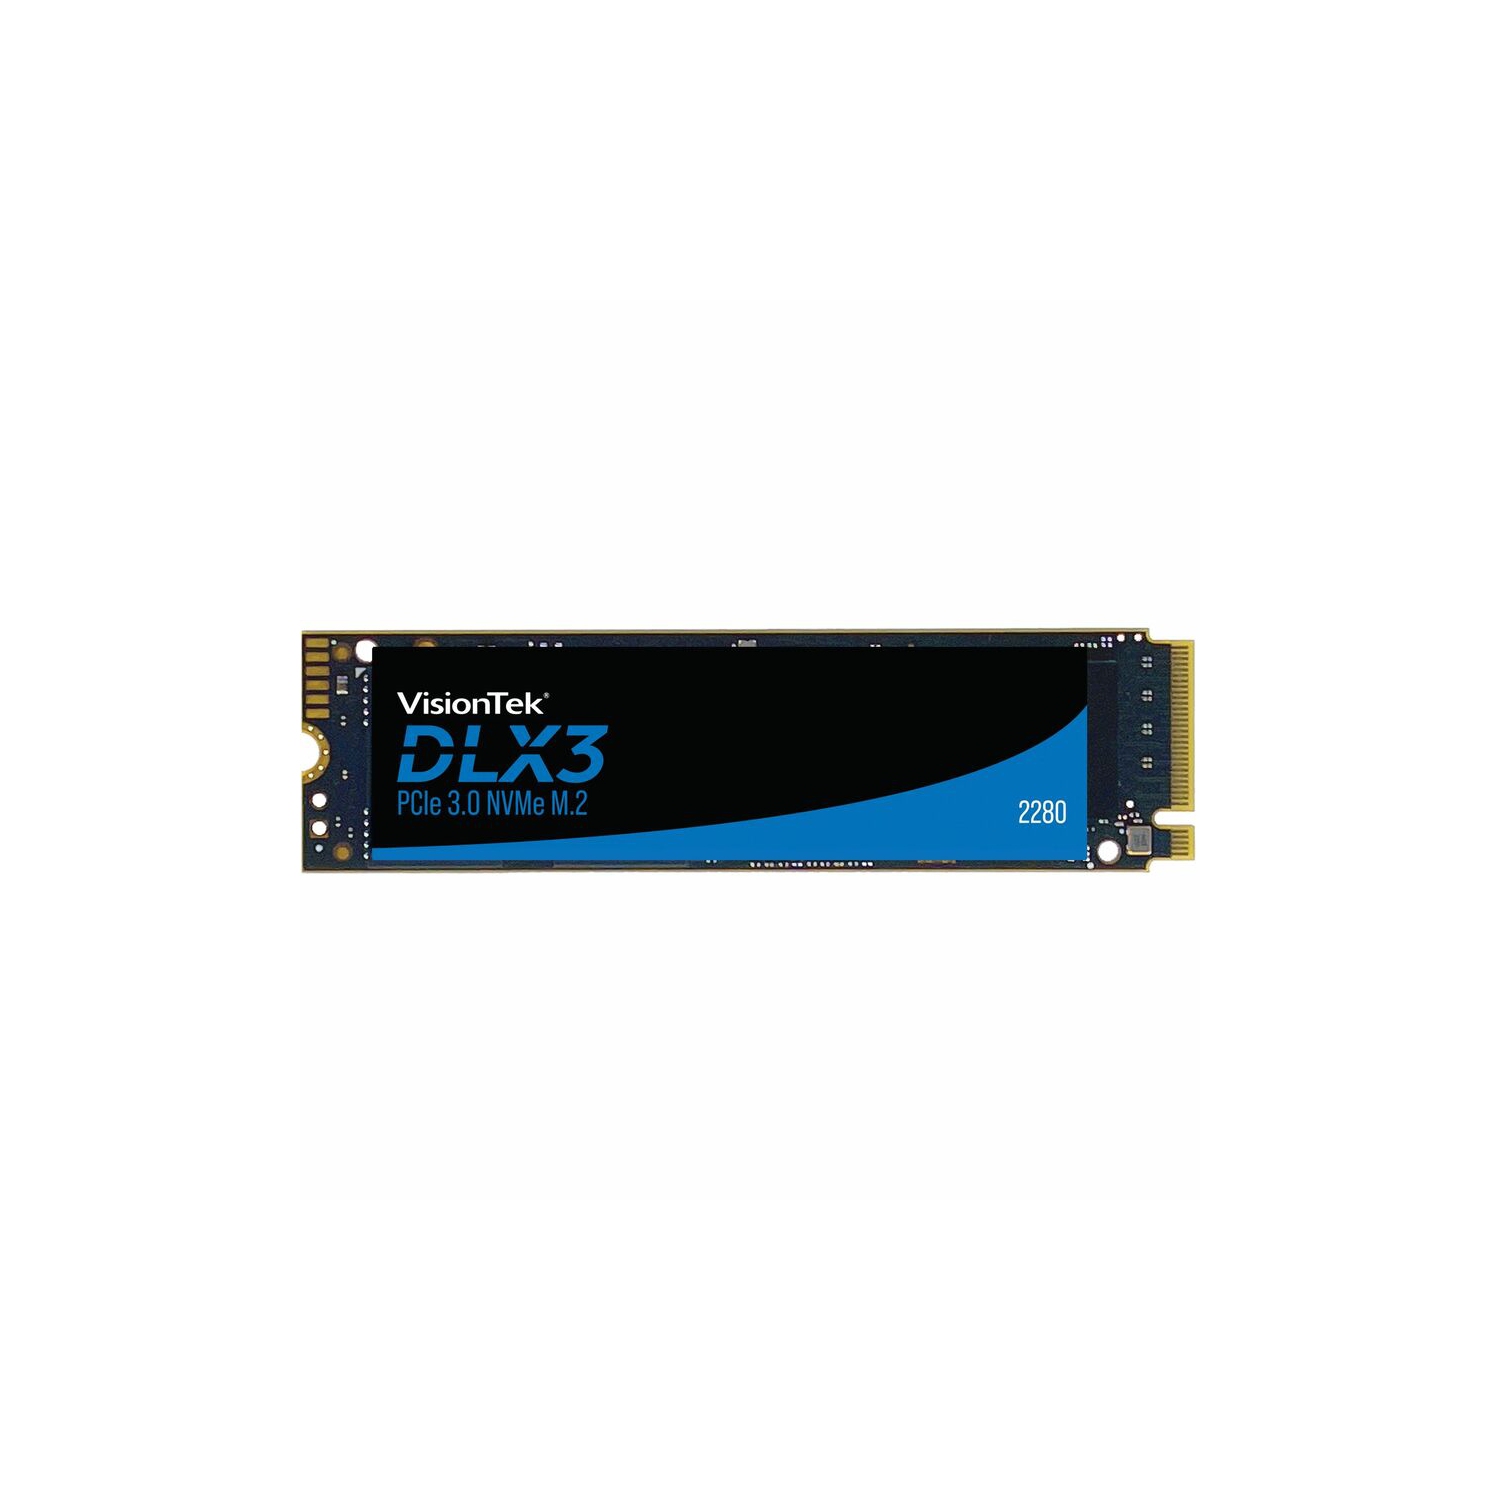 VisionTek DLX3 2280 M.2 PCIe 3.0 x4 SSD (NVMe) 901555